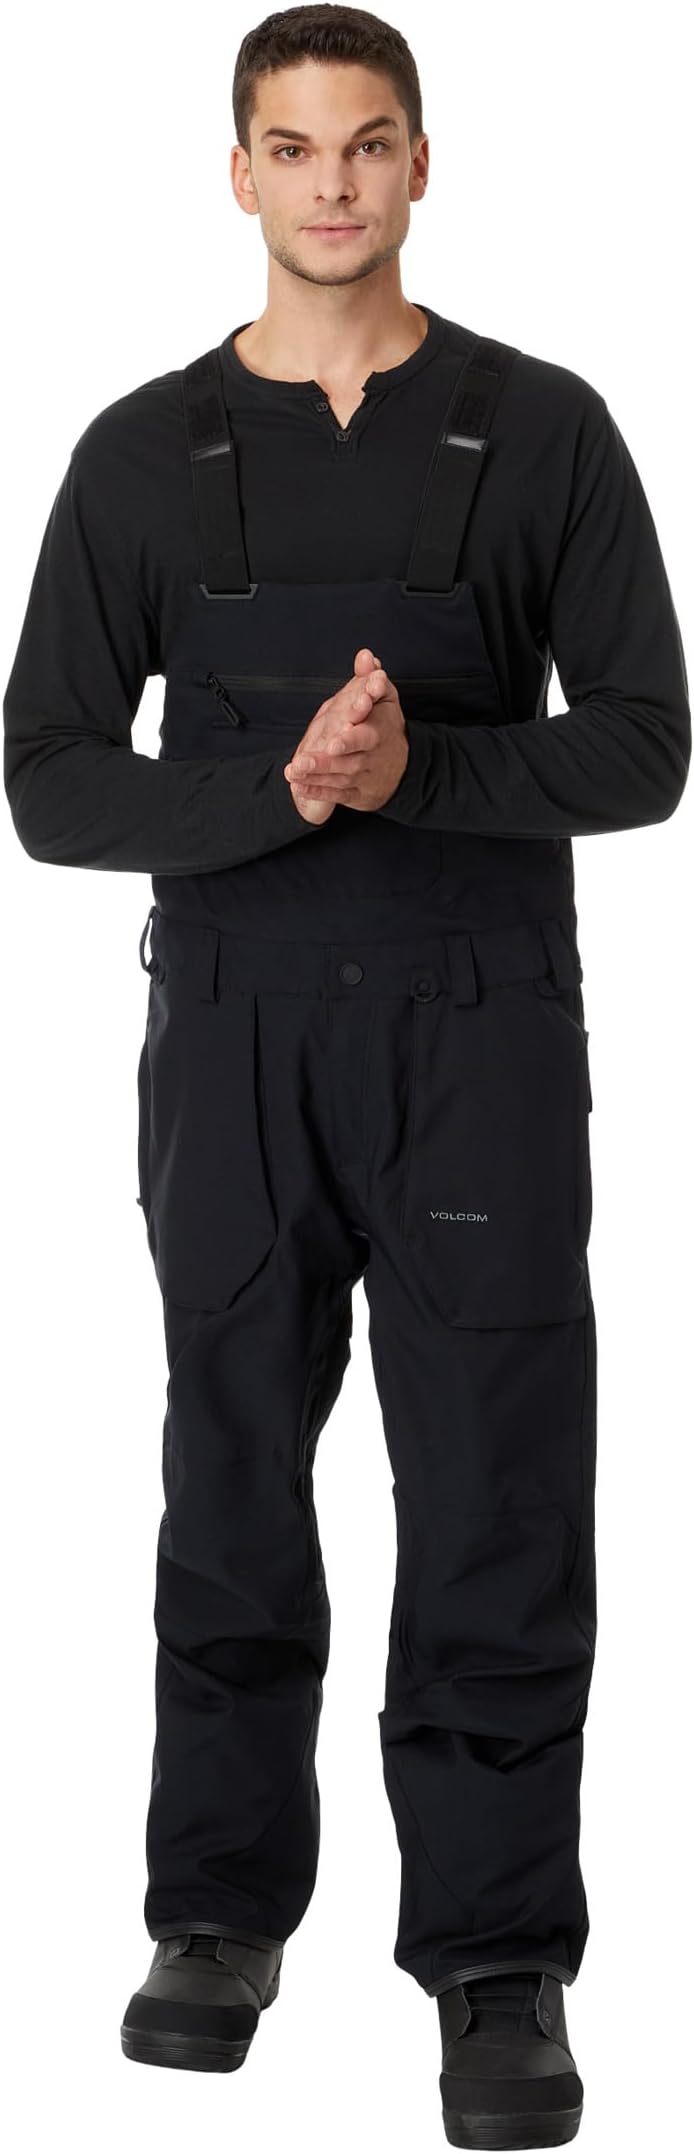 брюки timberland pro ironhide original fit flex bib overalls цвет jet black Брюки Roan Bib Overalls Volcom Snow, черный